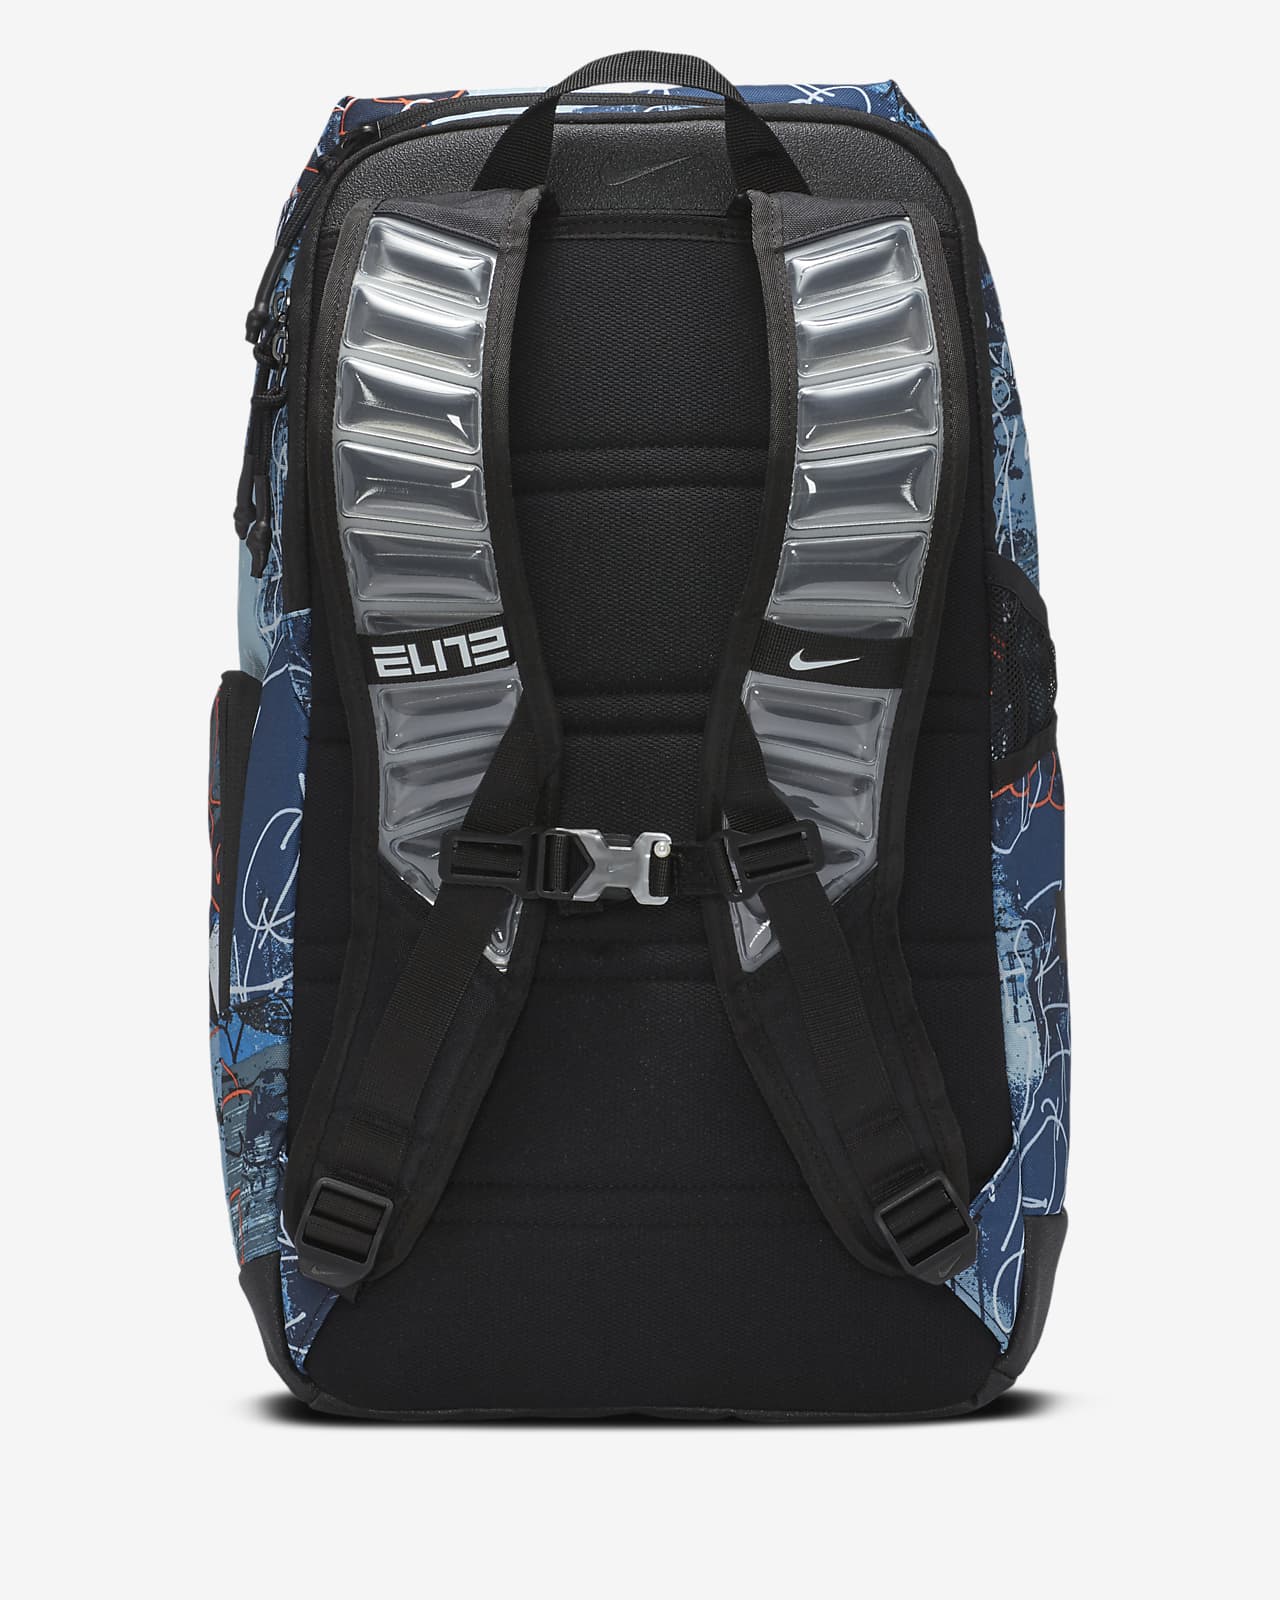 nike elite football backpack